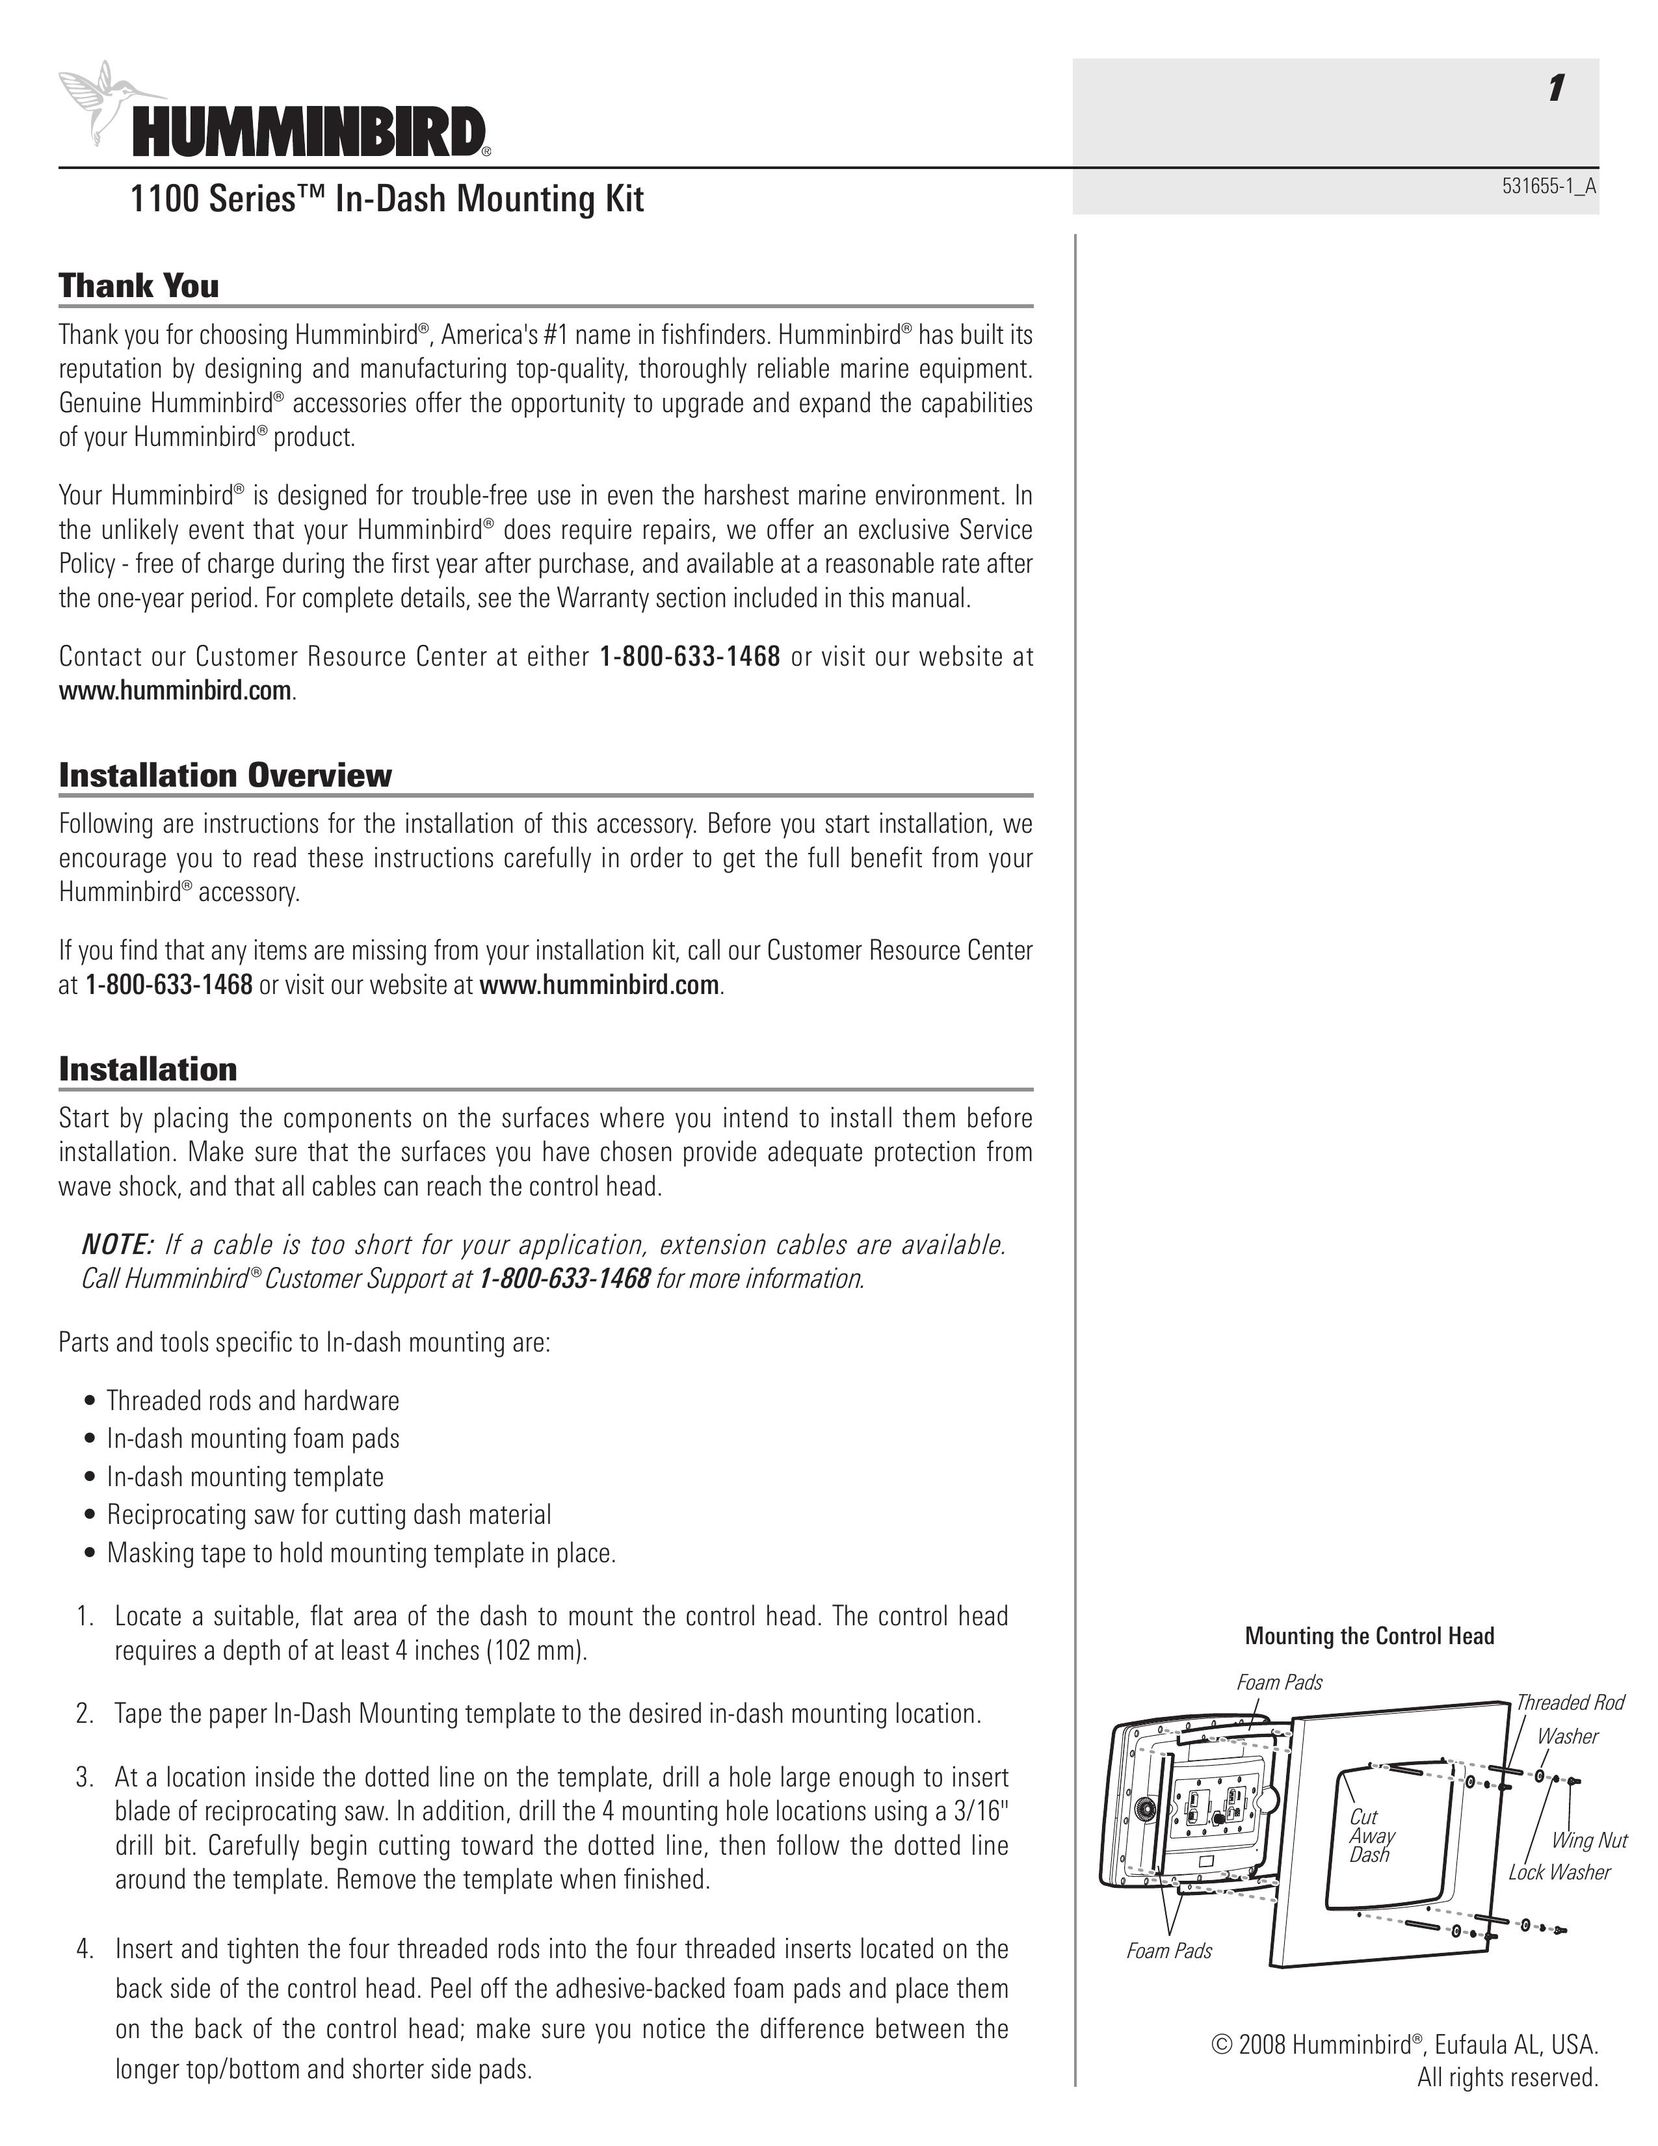 Humminbird 531655-1_A Car Video System User Manual